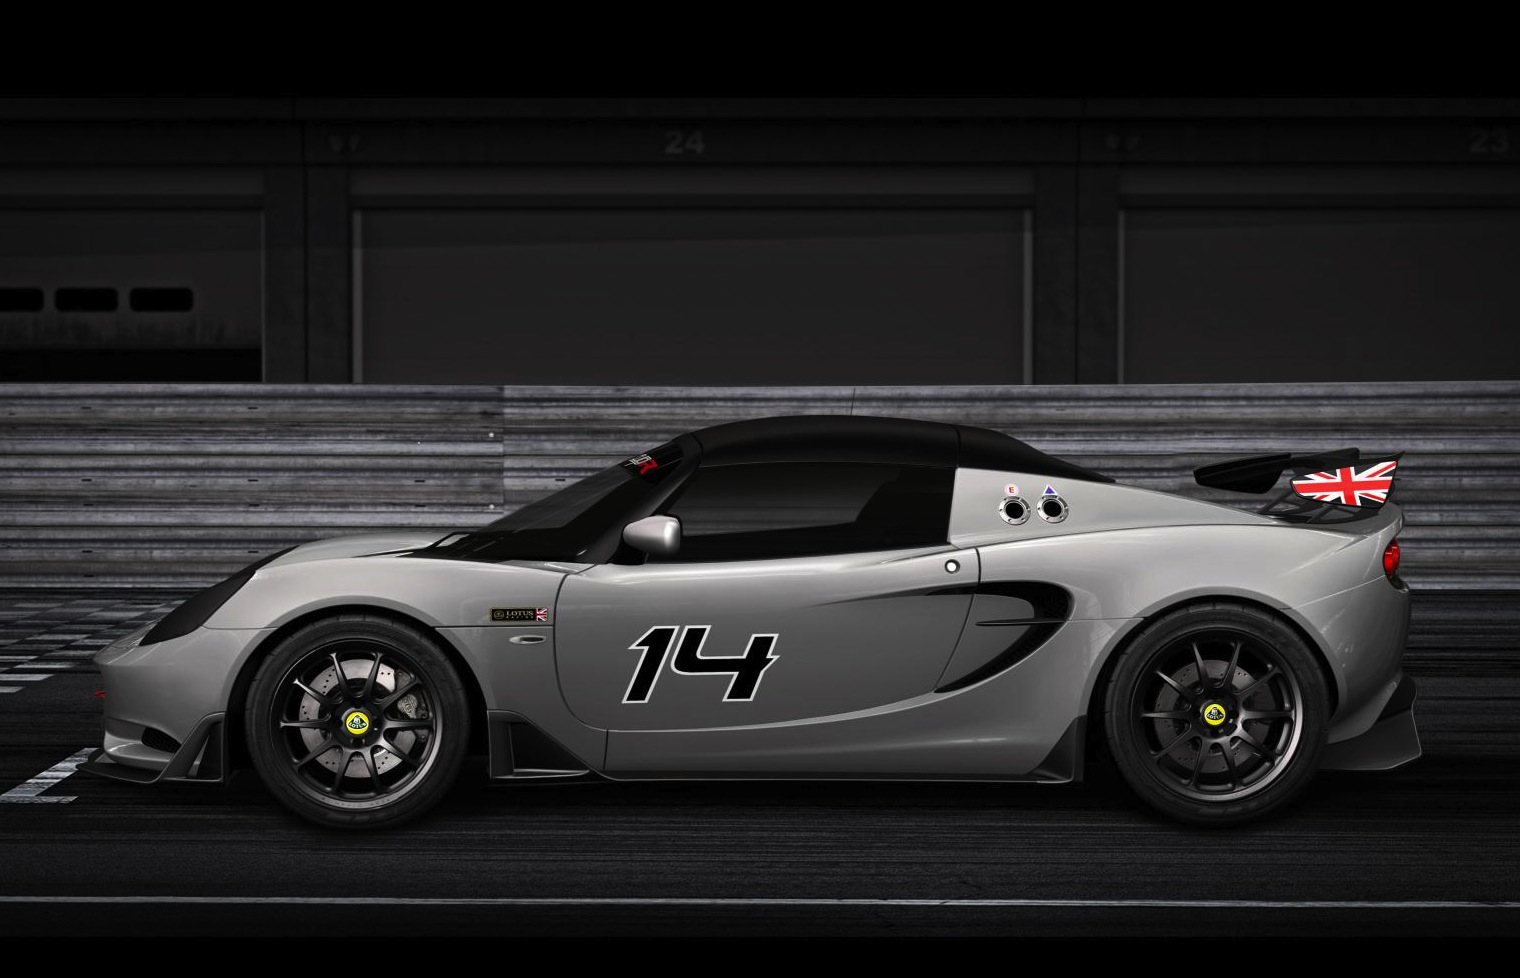 Lotus Elise S Cup R makes public debut at Autosport 2014